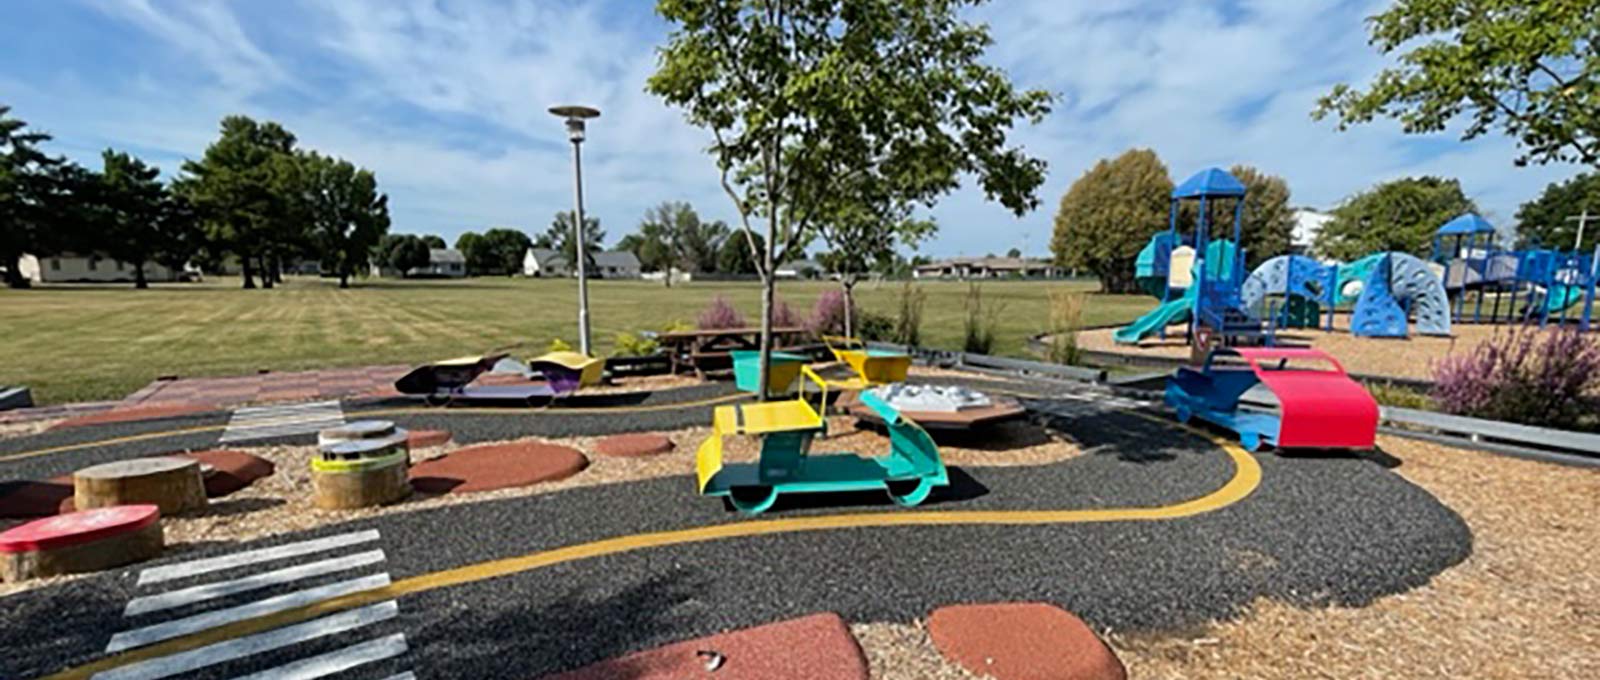 playground equipment at Davis Park